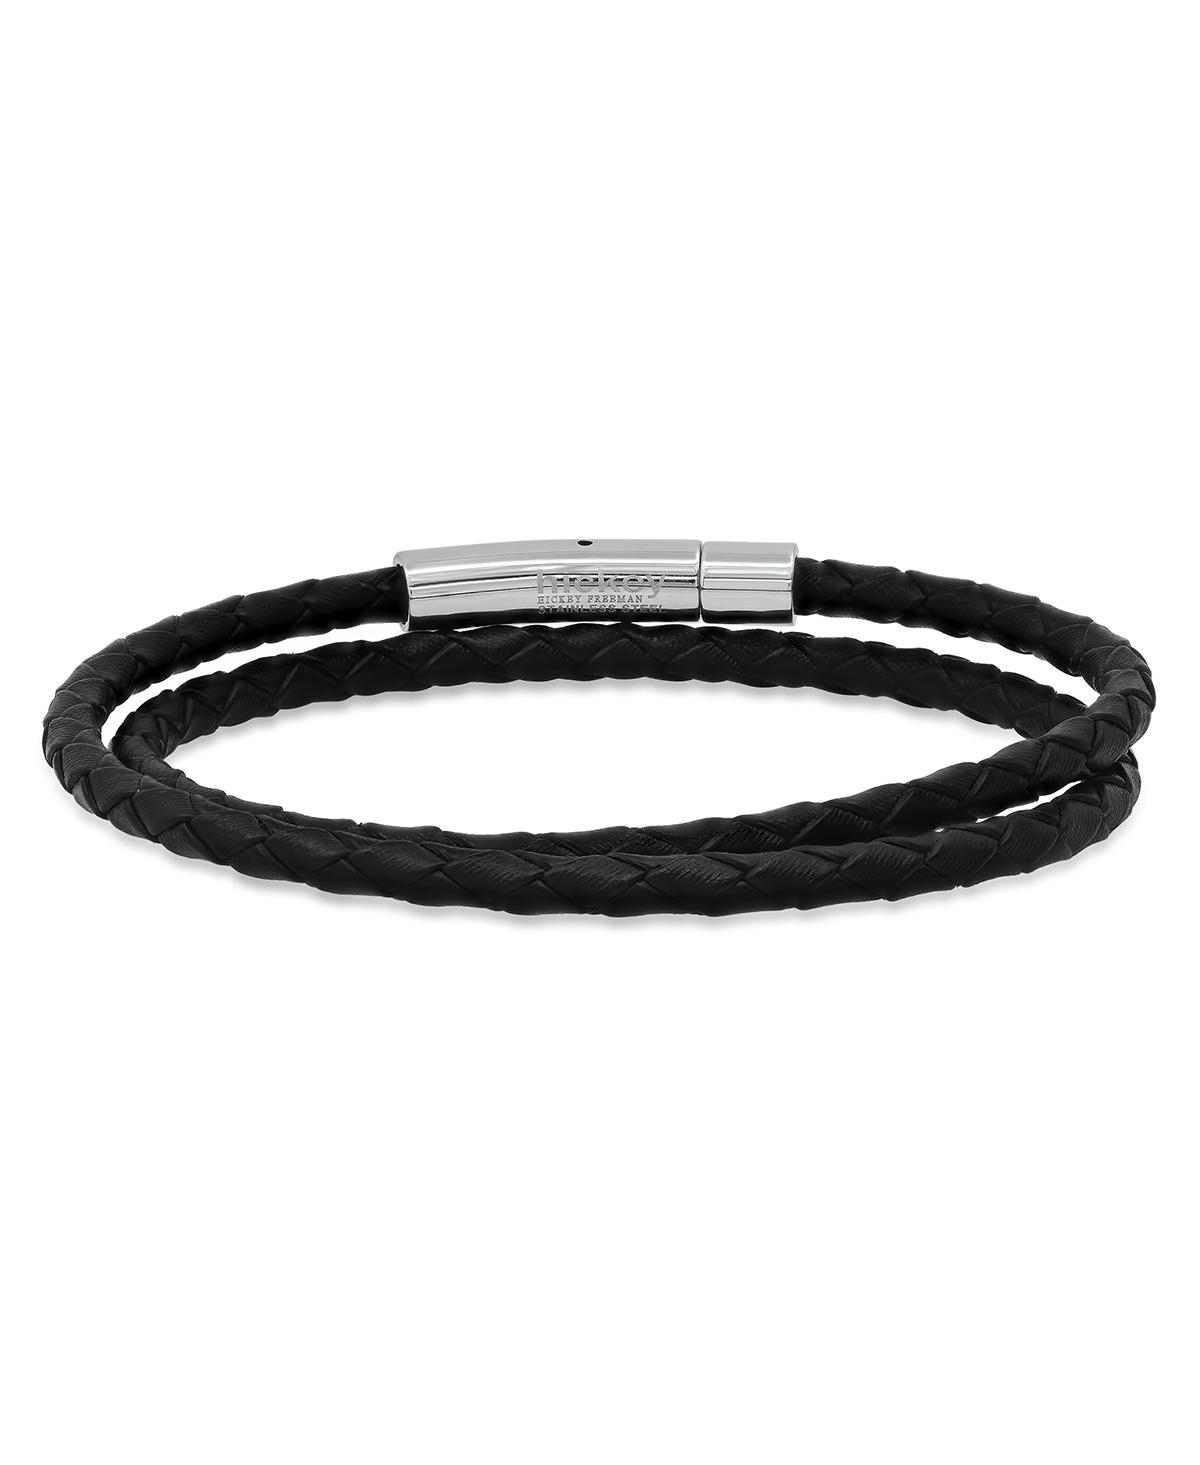 Hmy Jewelry Stainless Steel Leather Braided Bracelet In Multi